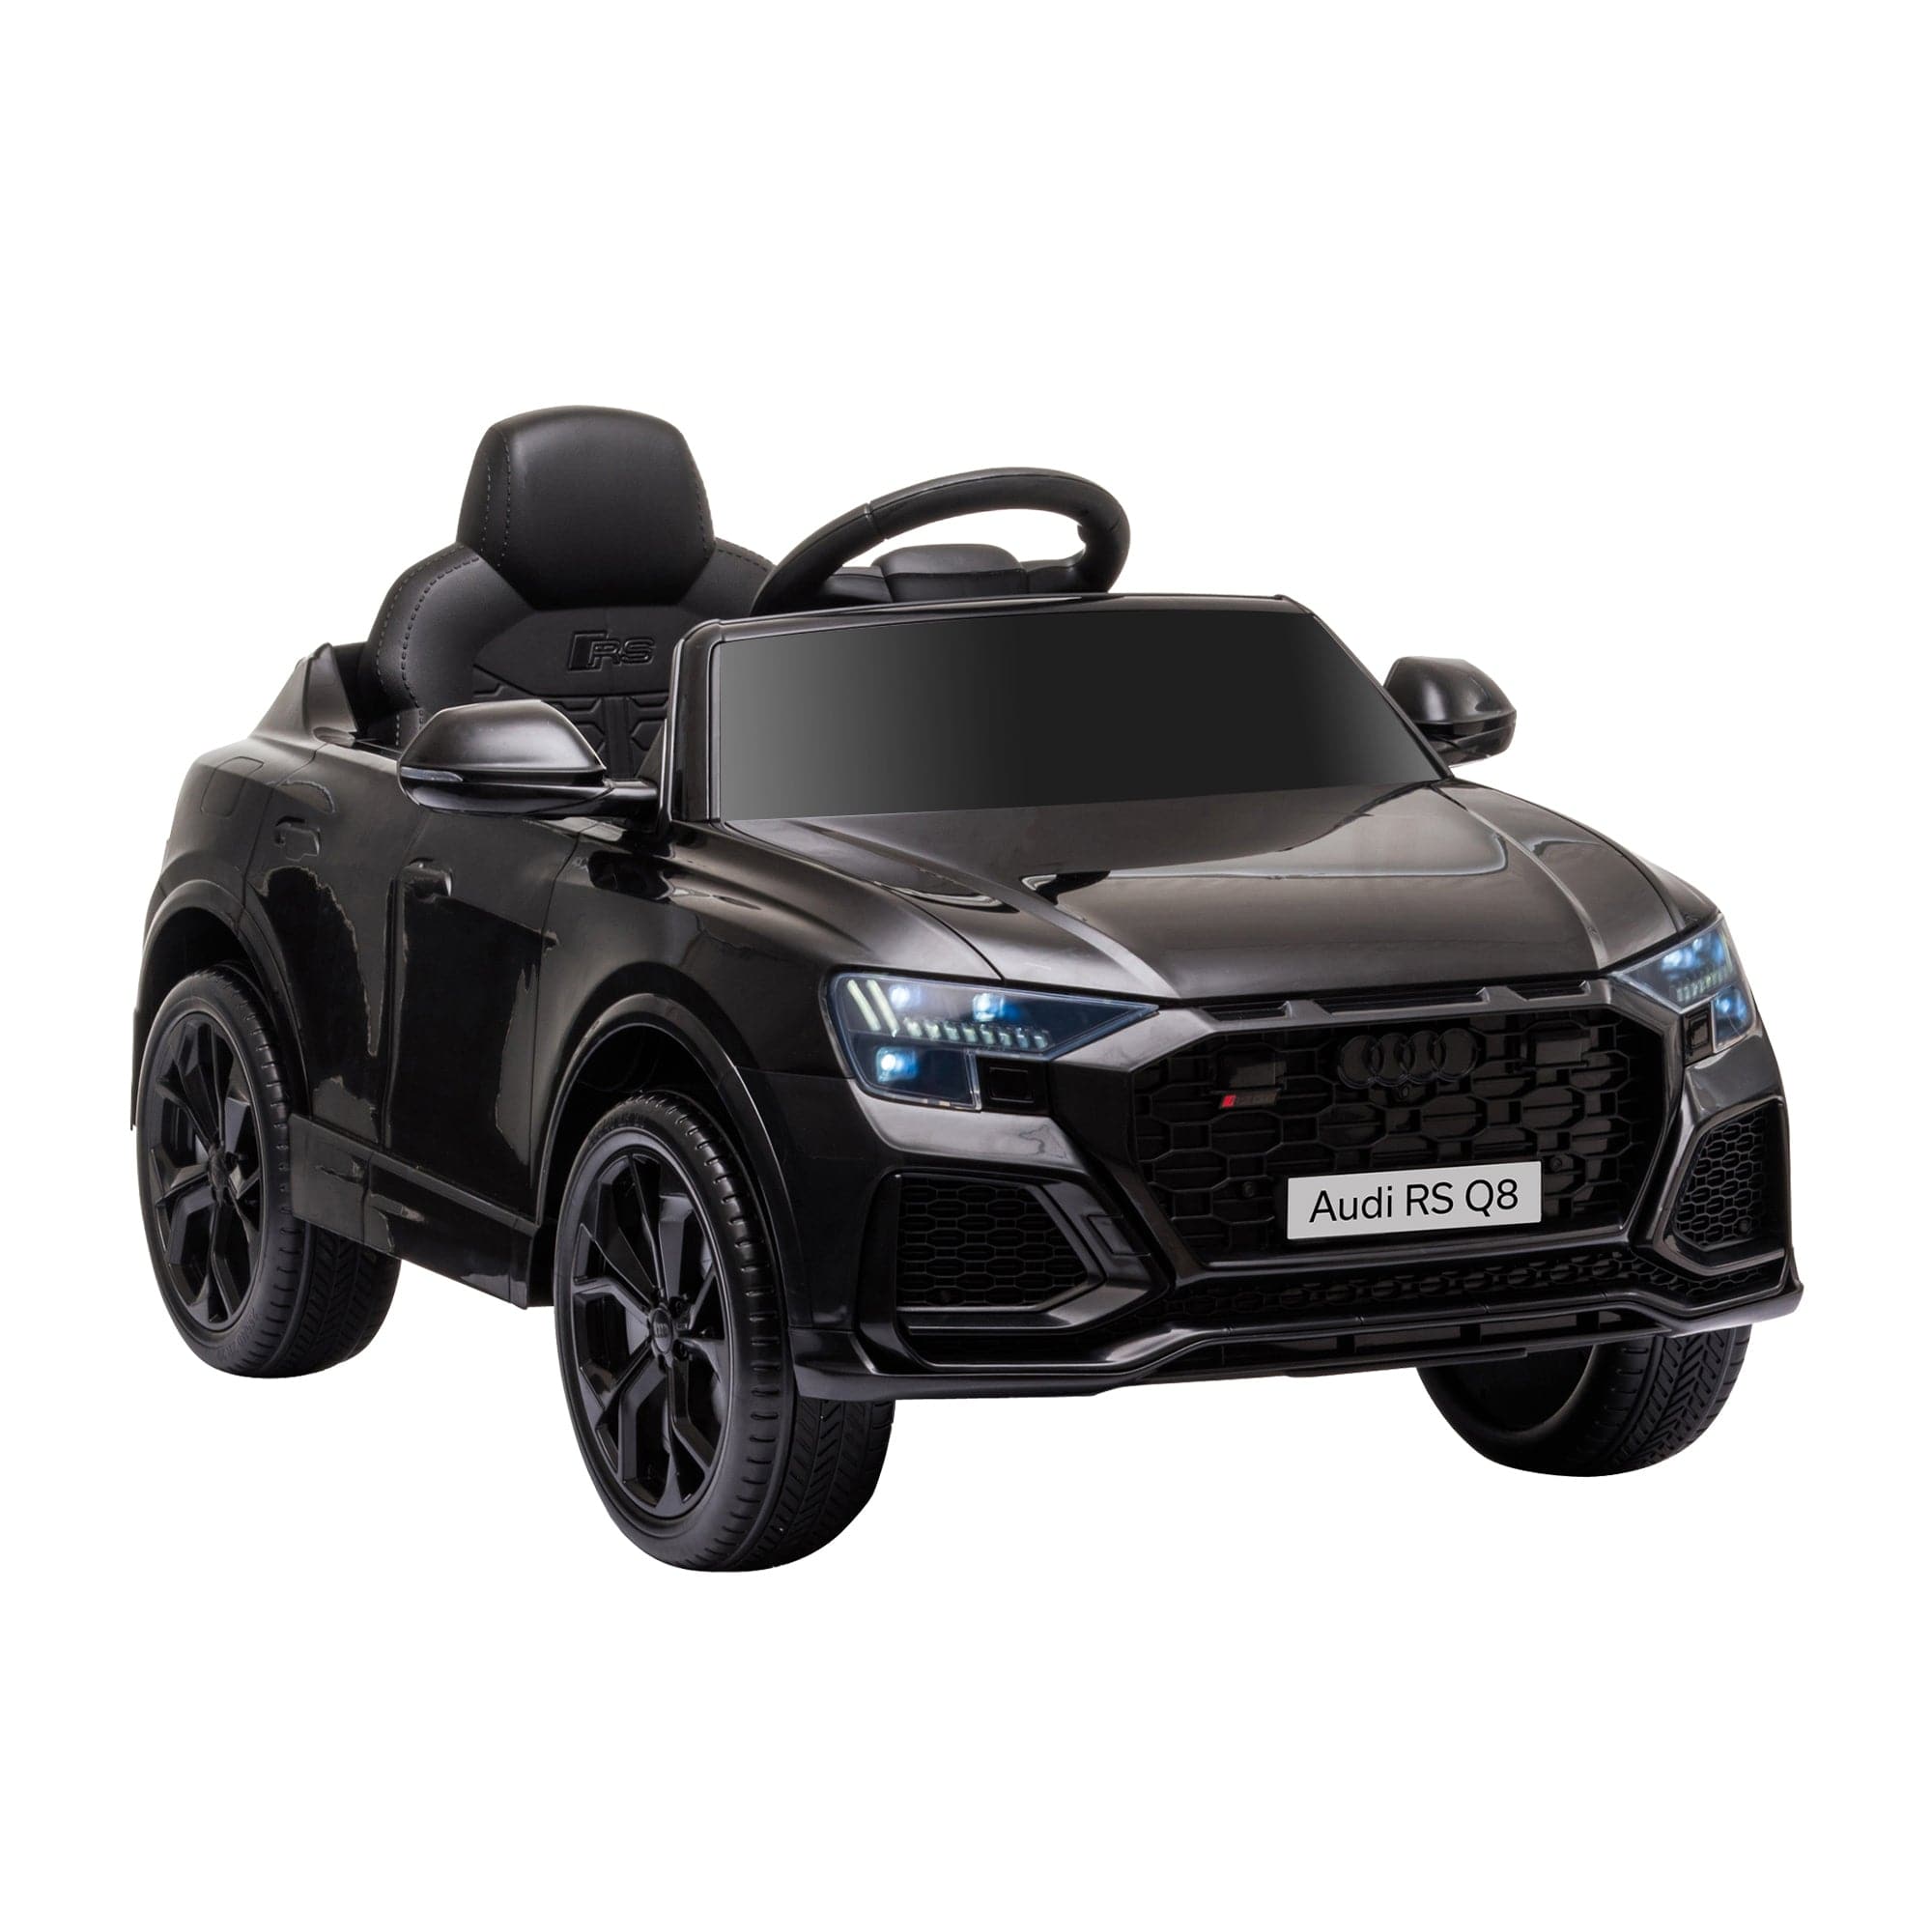 HOMCOM Audi RS Q8 6V Kids Electric Ride On Toy Car with Remote Control, USB & Bluetooth (Black)